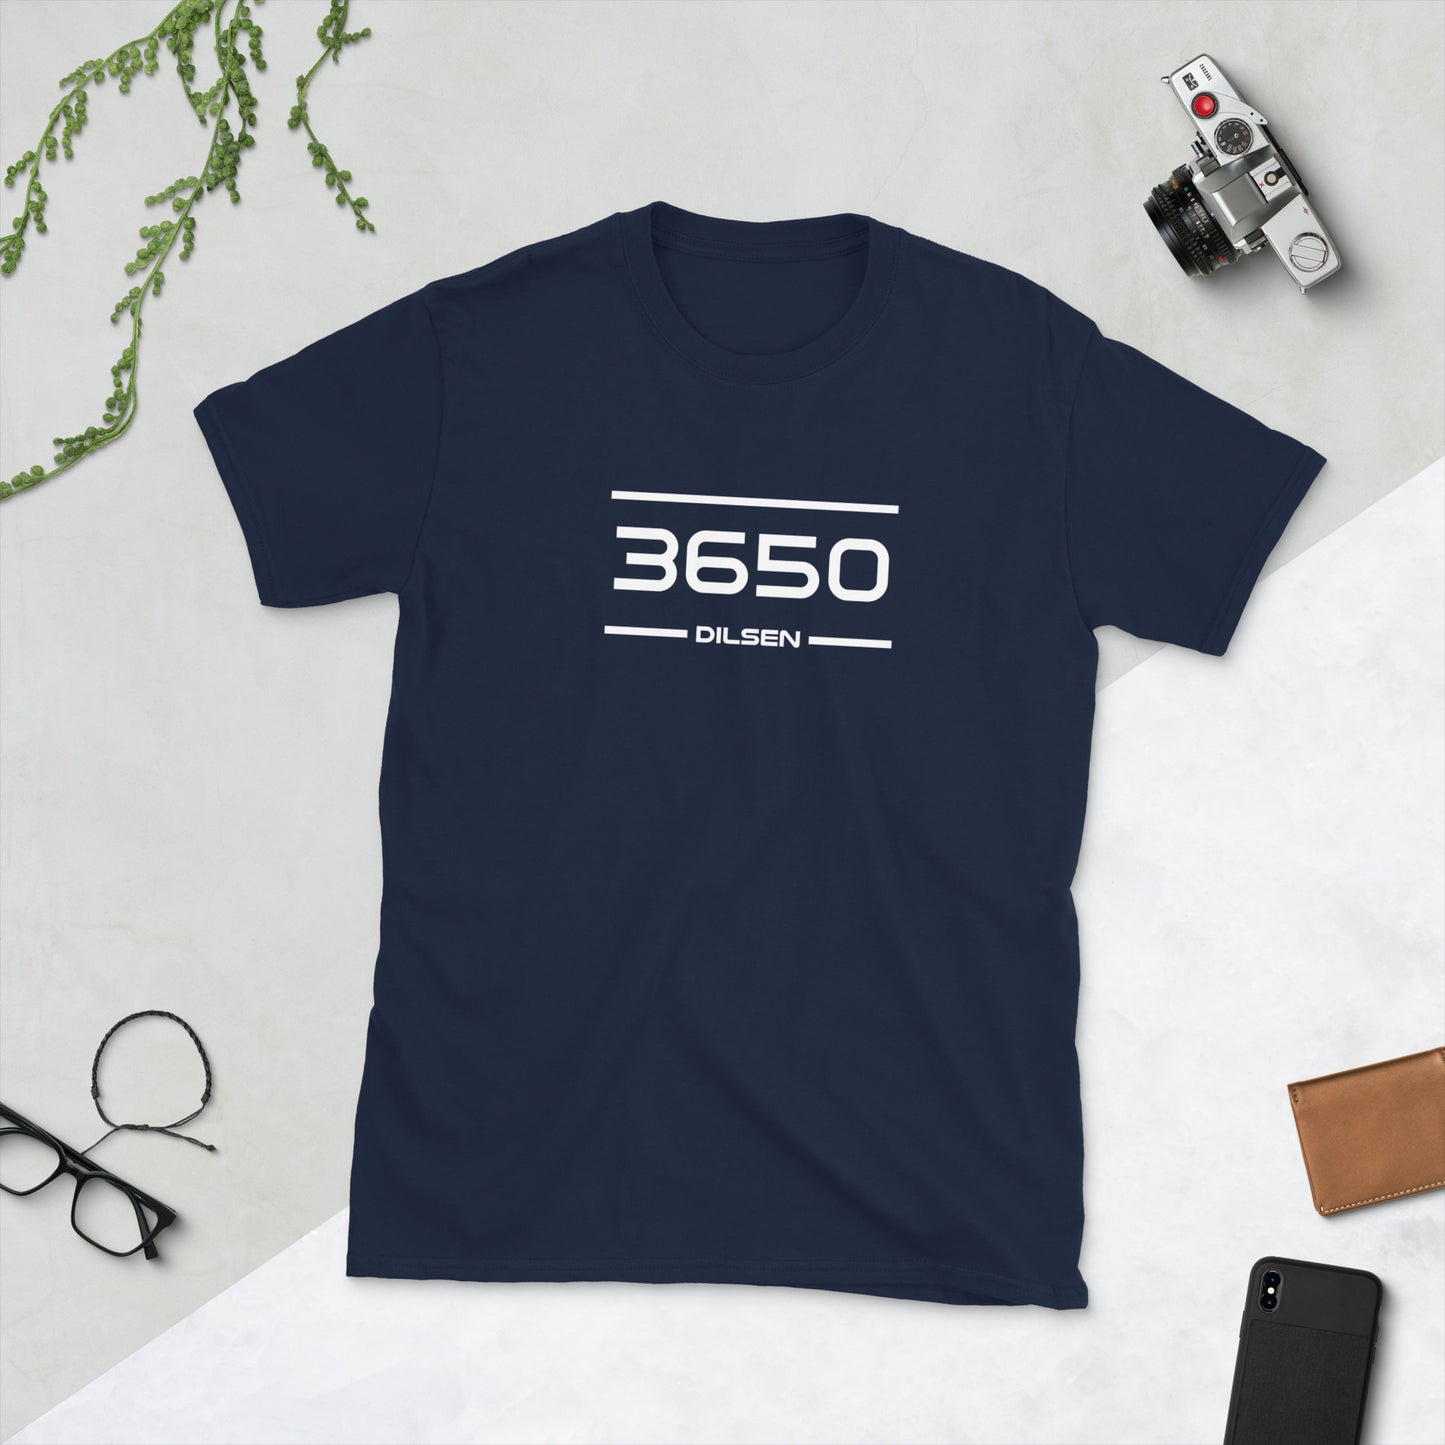 Tshirt - 3650 - Dilsen